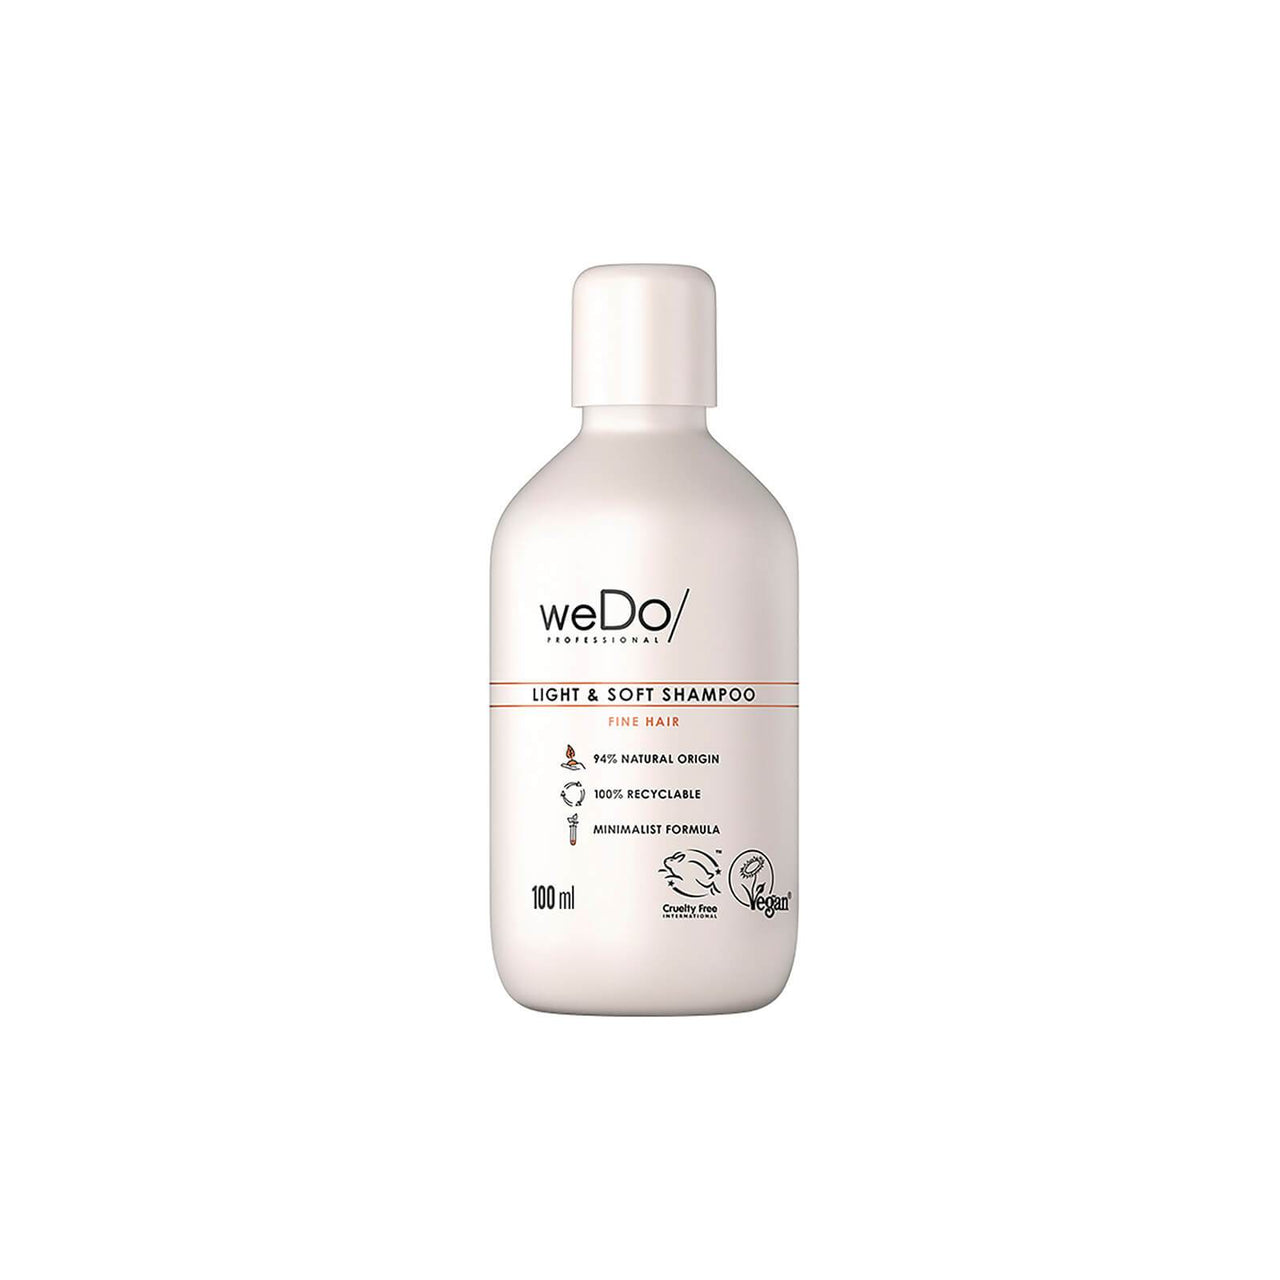 weDo/ Professional Light and Soft Shampoo